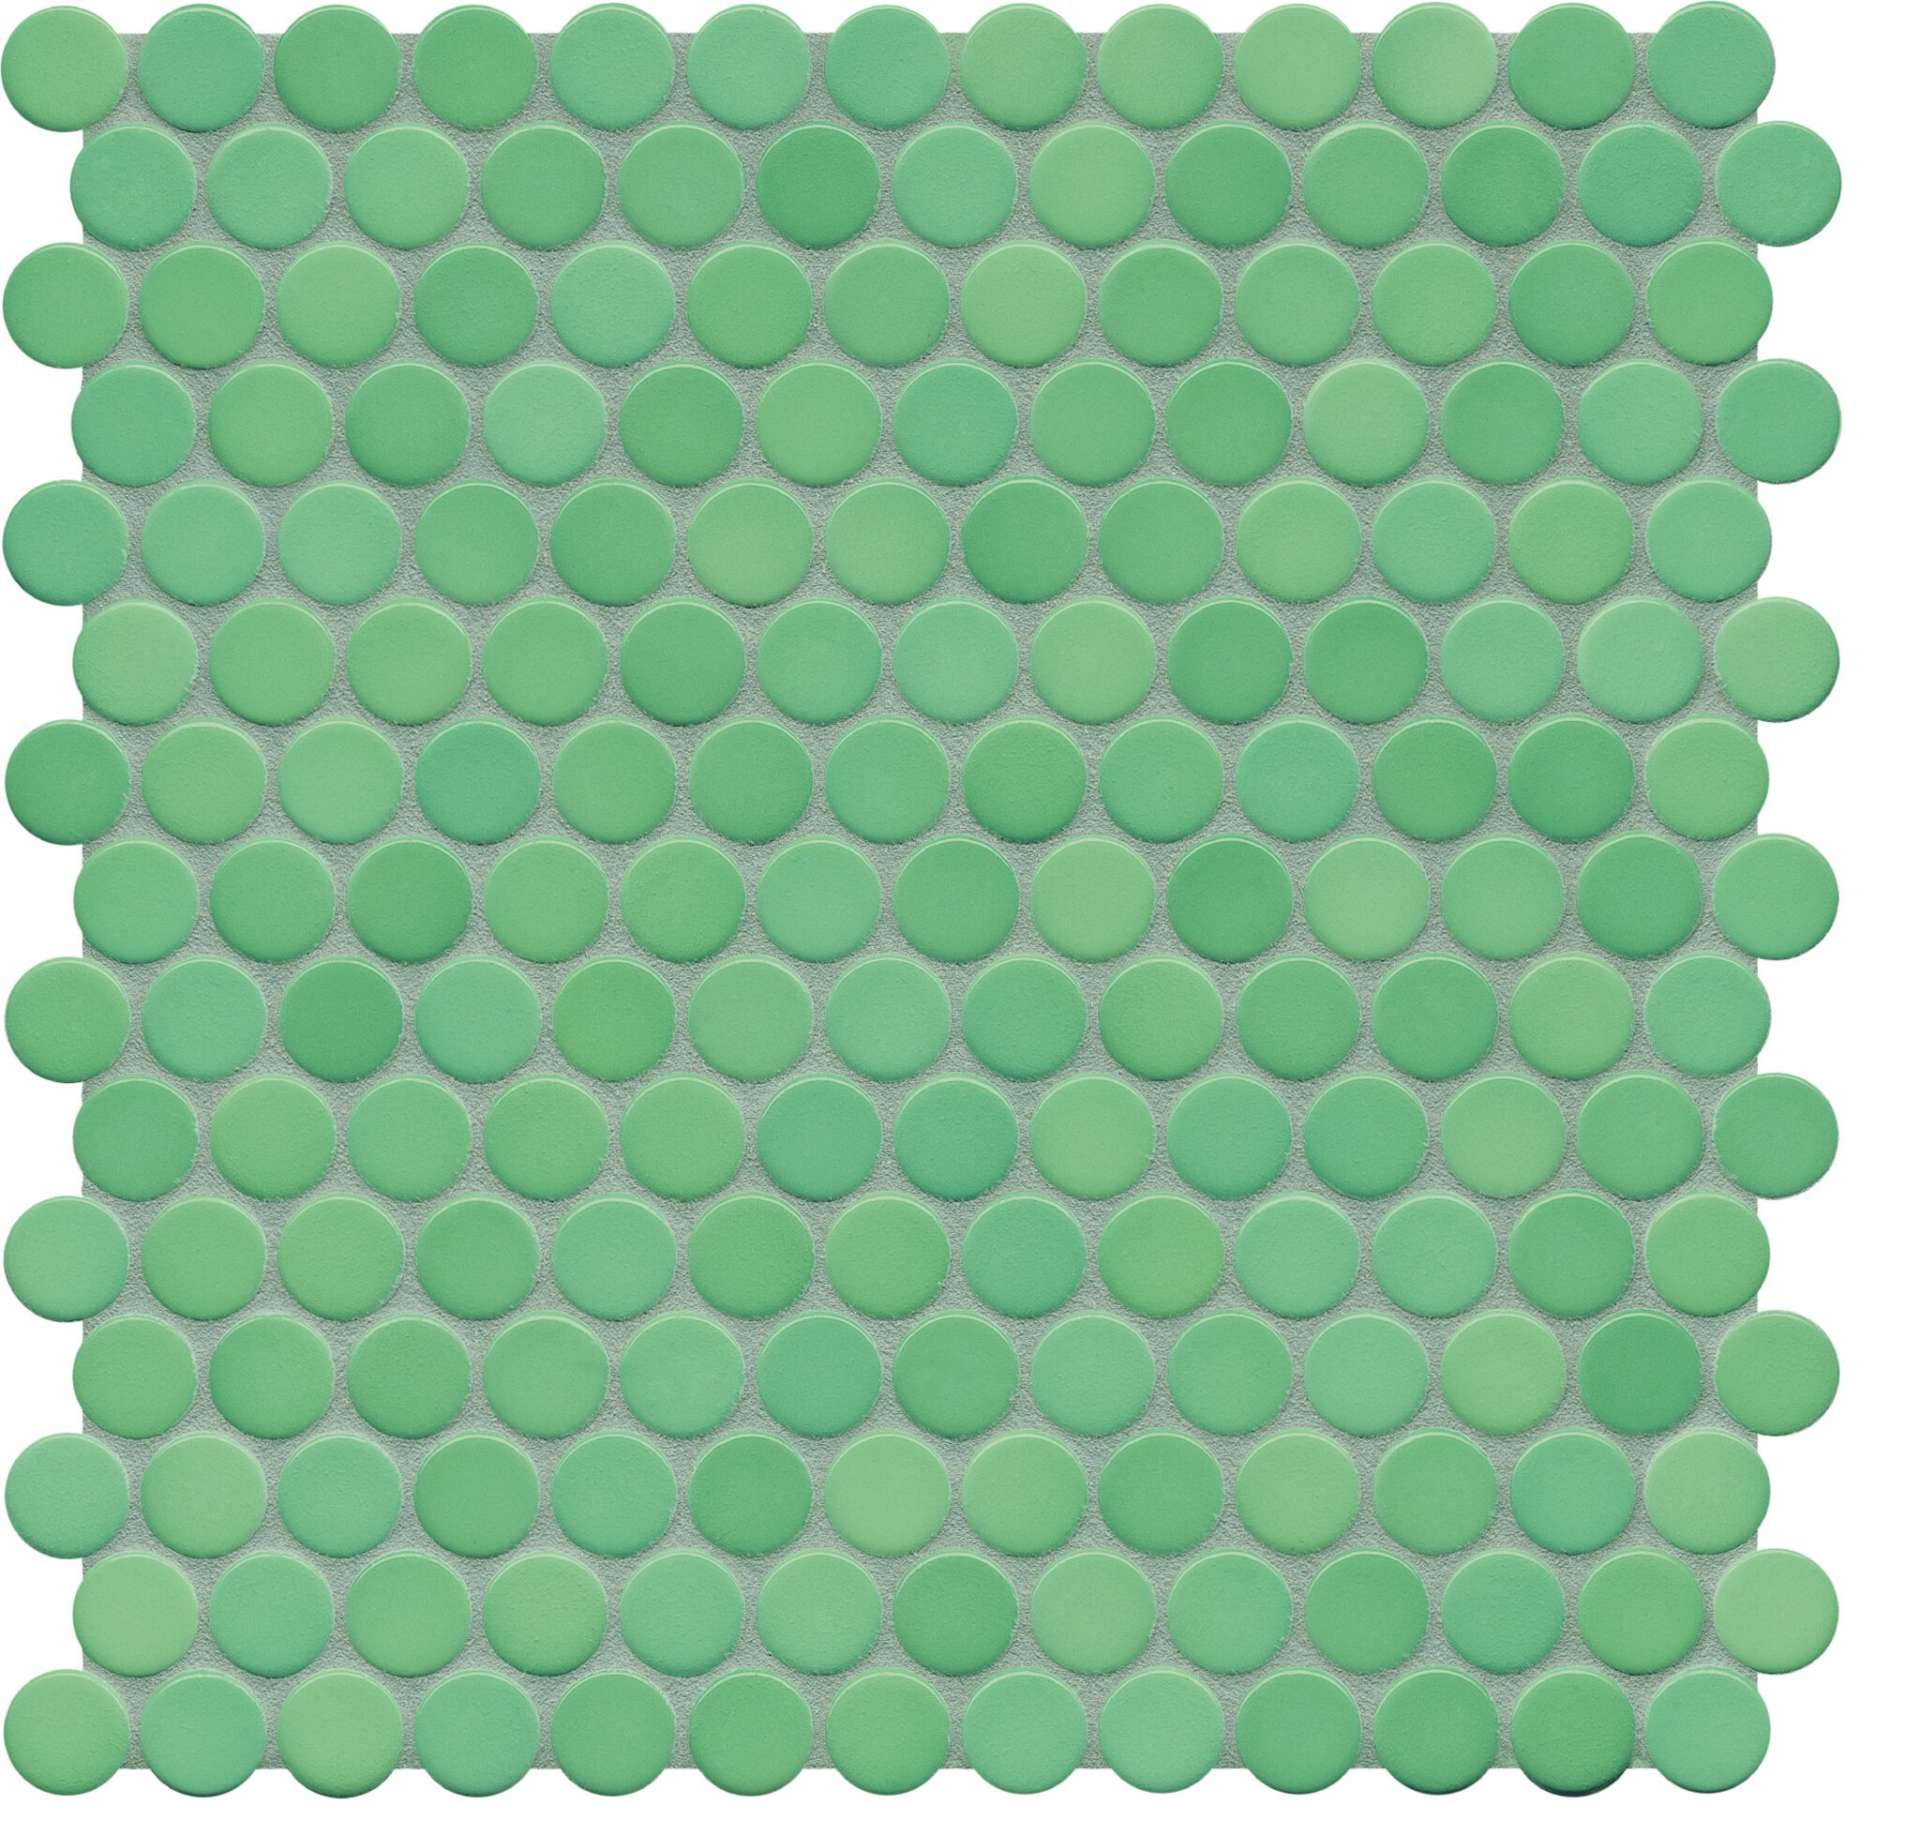 Мозаика Jasba Loop Seegr?n 40071H-44, цвет зелёный, поверхность матовая, круг и овал, 312x316